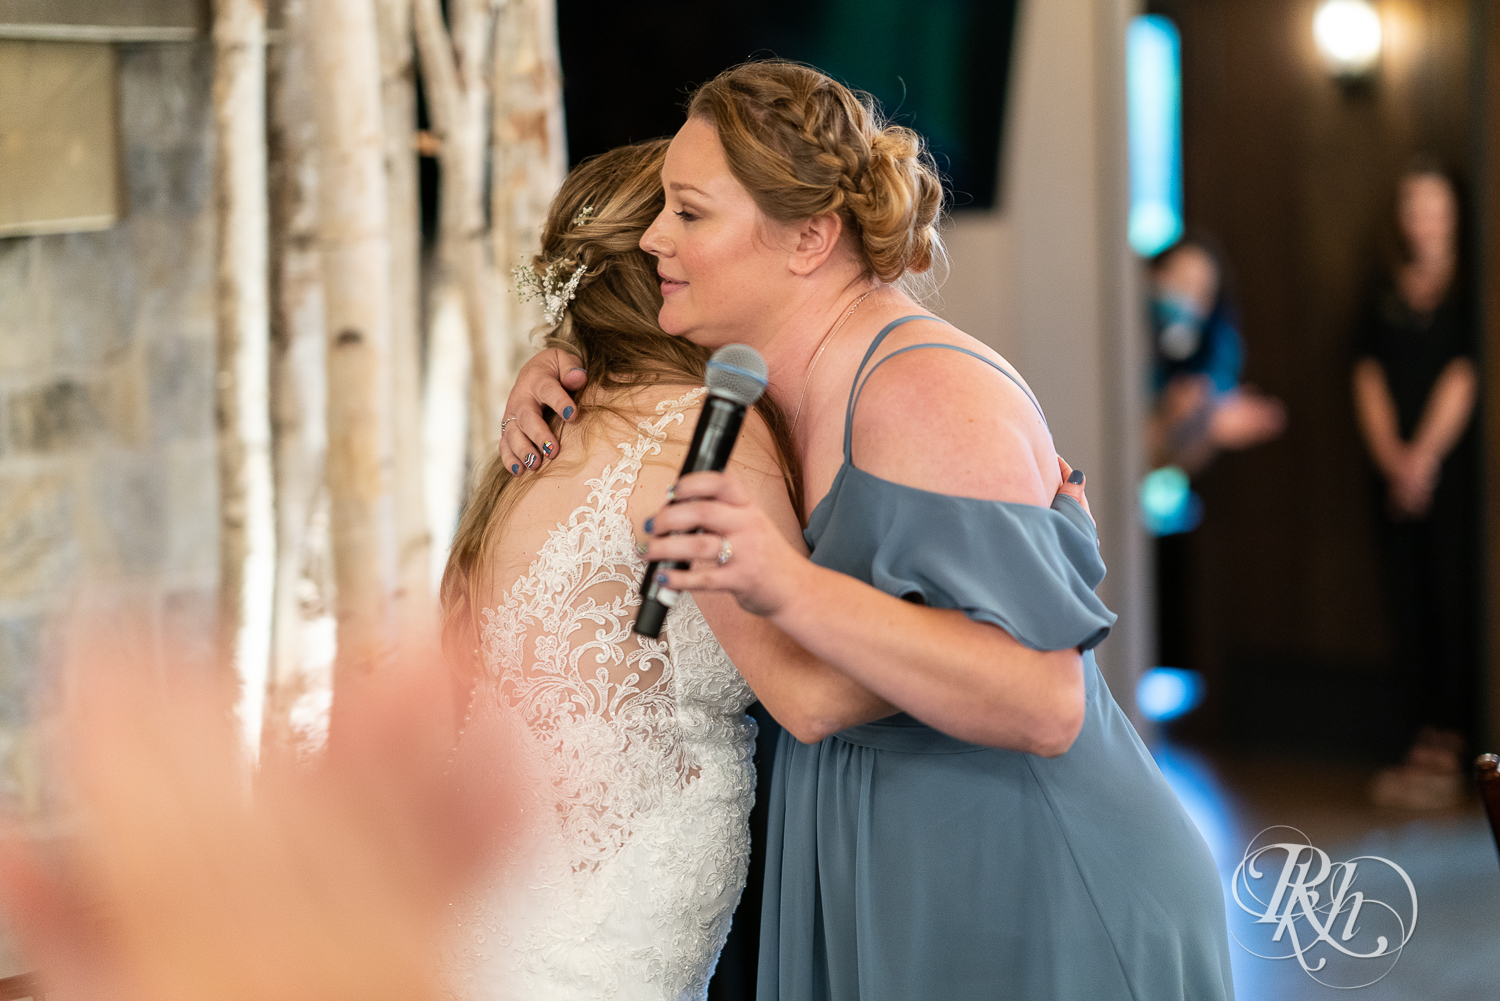 Bride hugging maid of honor during wedding reception at 7 Vines Vineyard in Dellwood, Minnesota.